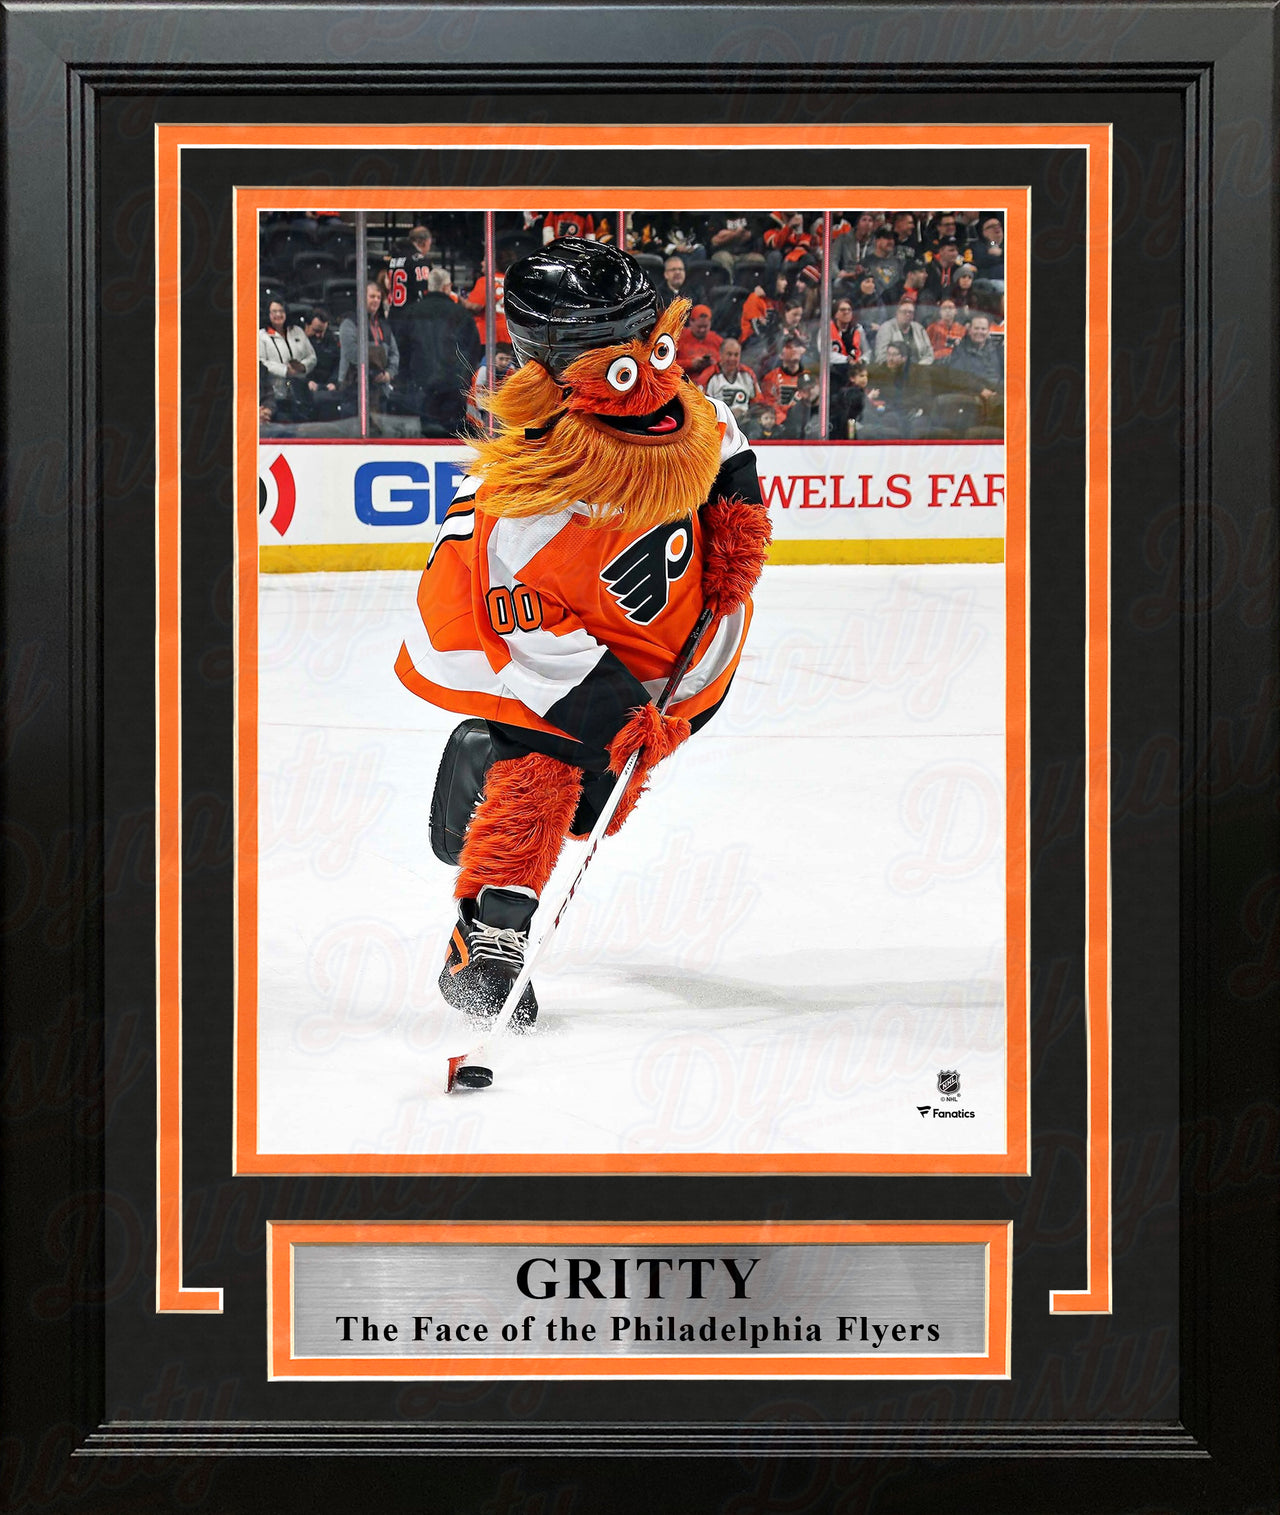 Gritty Skating Down the Ice Philadelphia Flyers 8" x 10" Framed Hockey Mascot Photo - Dynasty Sports & Framing 